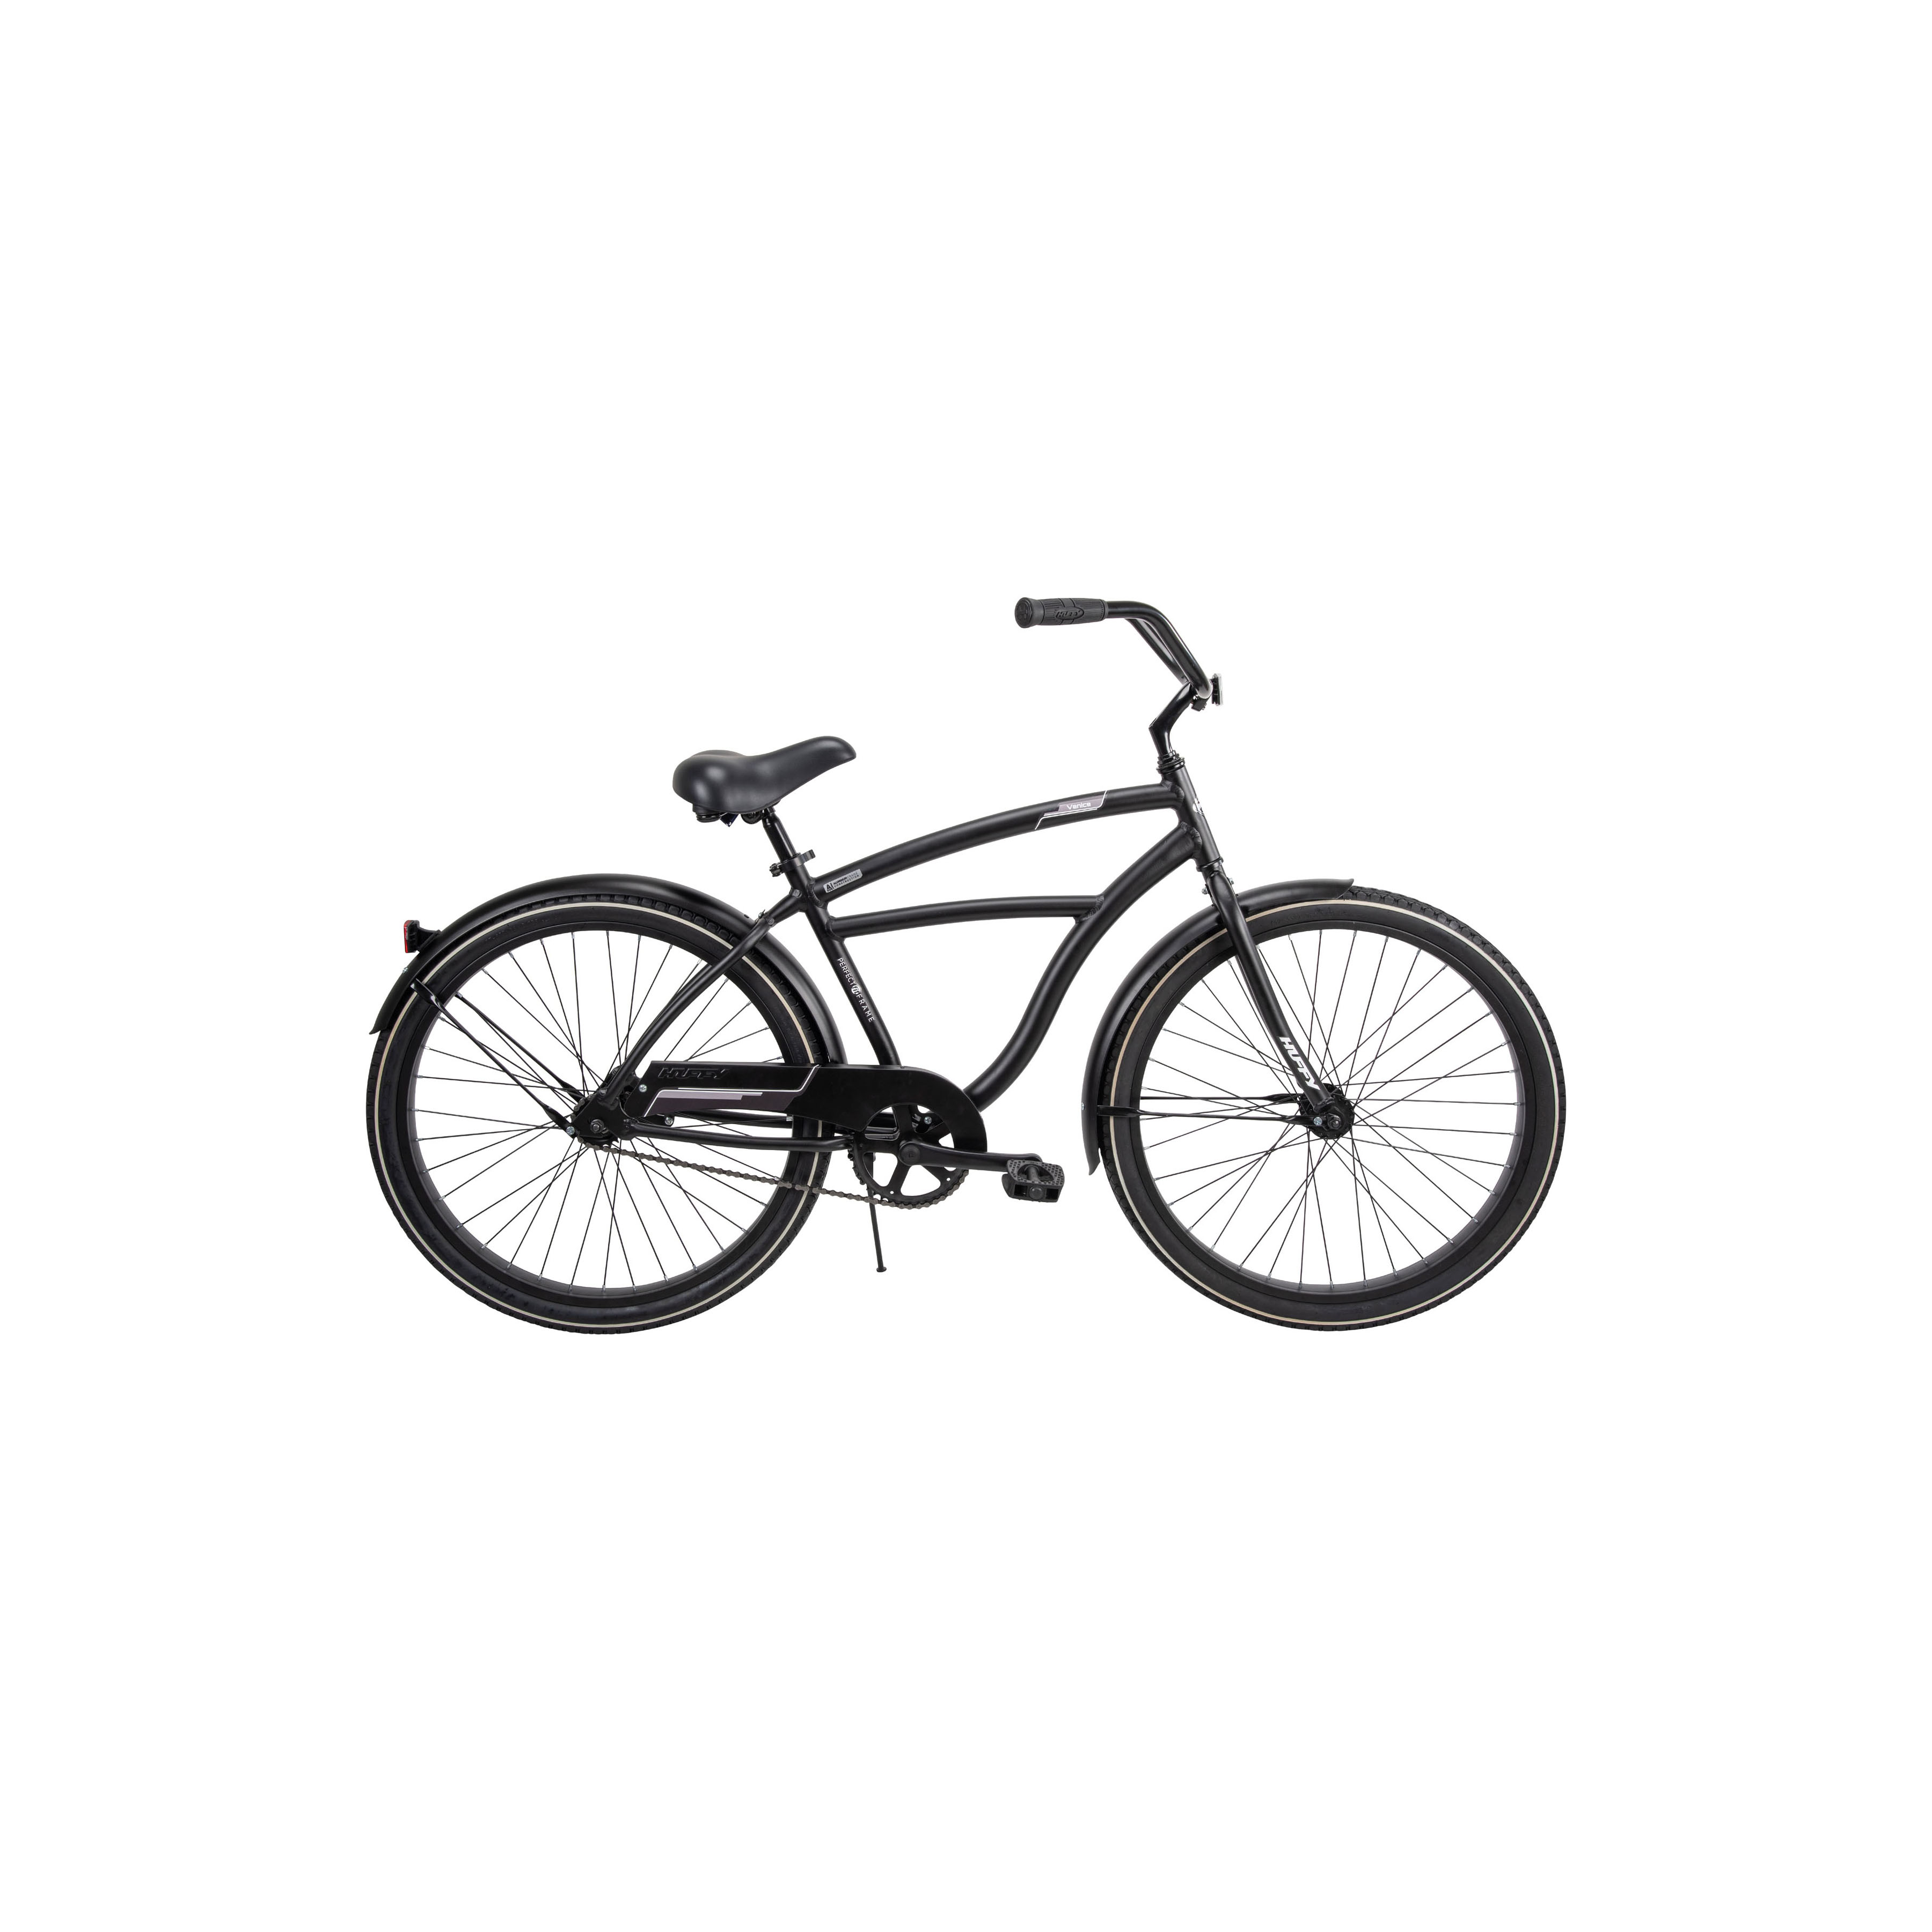 Men's Cruiser Bicycle, Aluminum Frame, Rear Coaster Brake, 26 in Dia Wheel, Matte Black